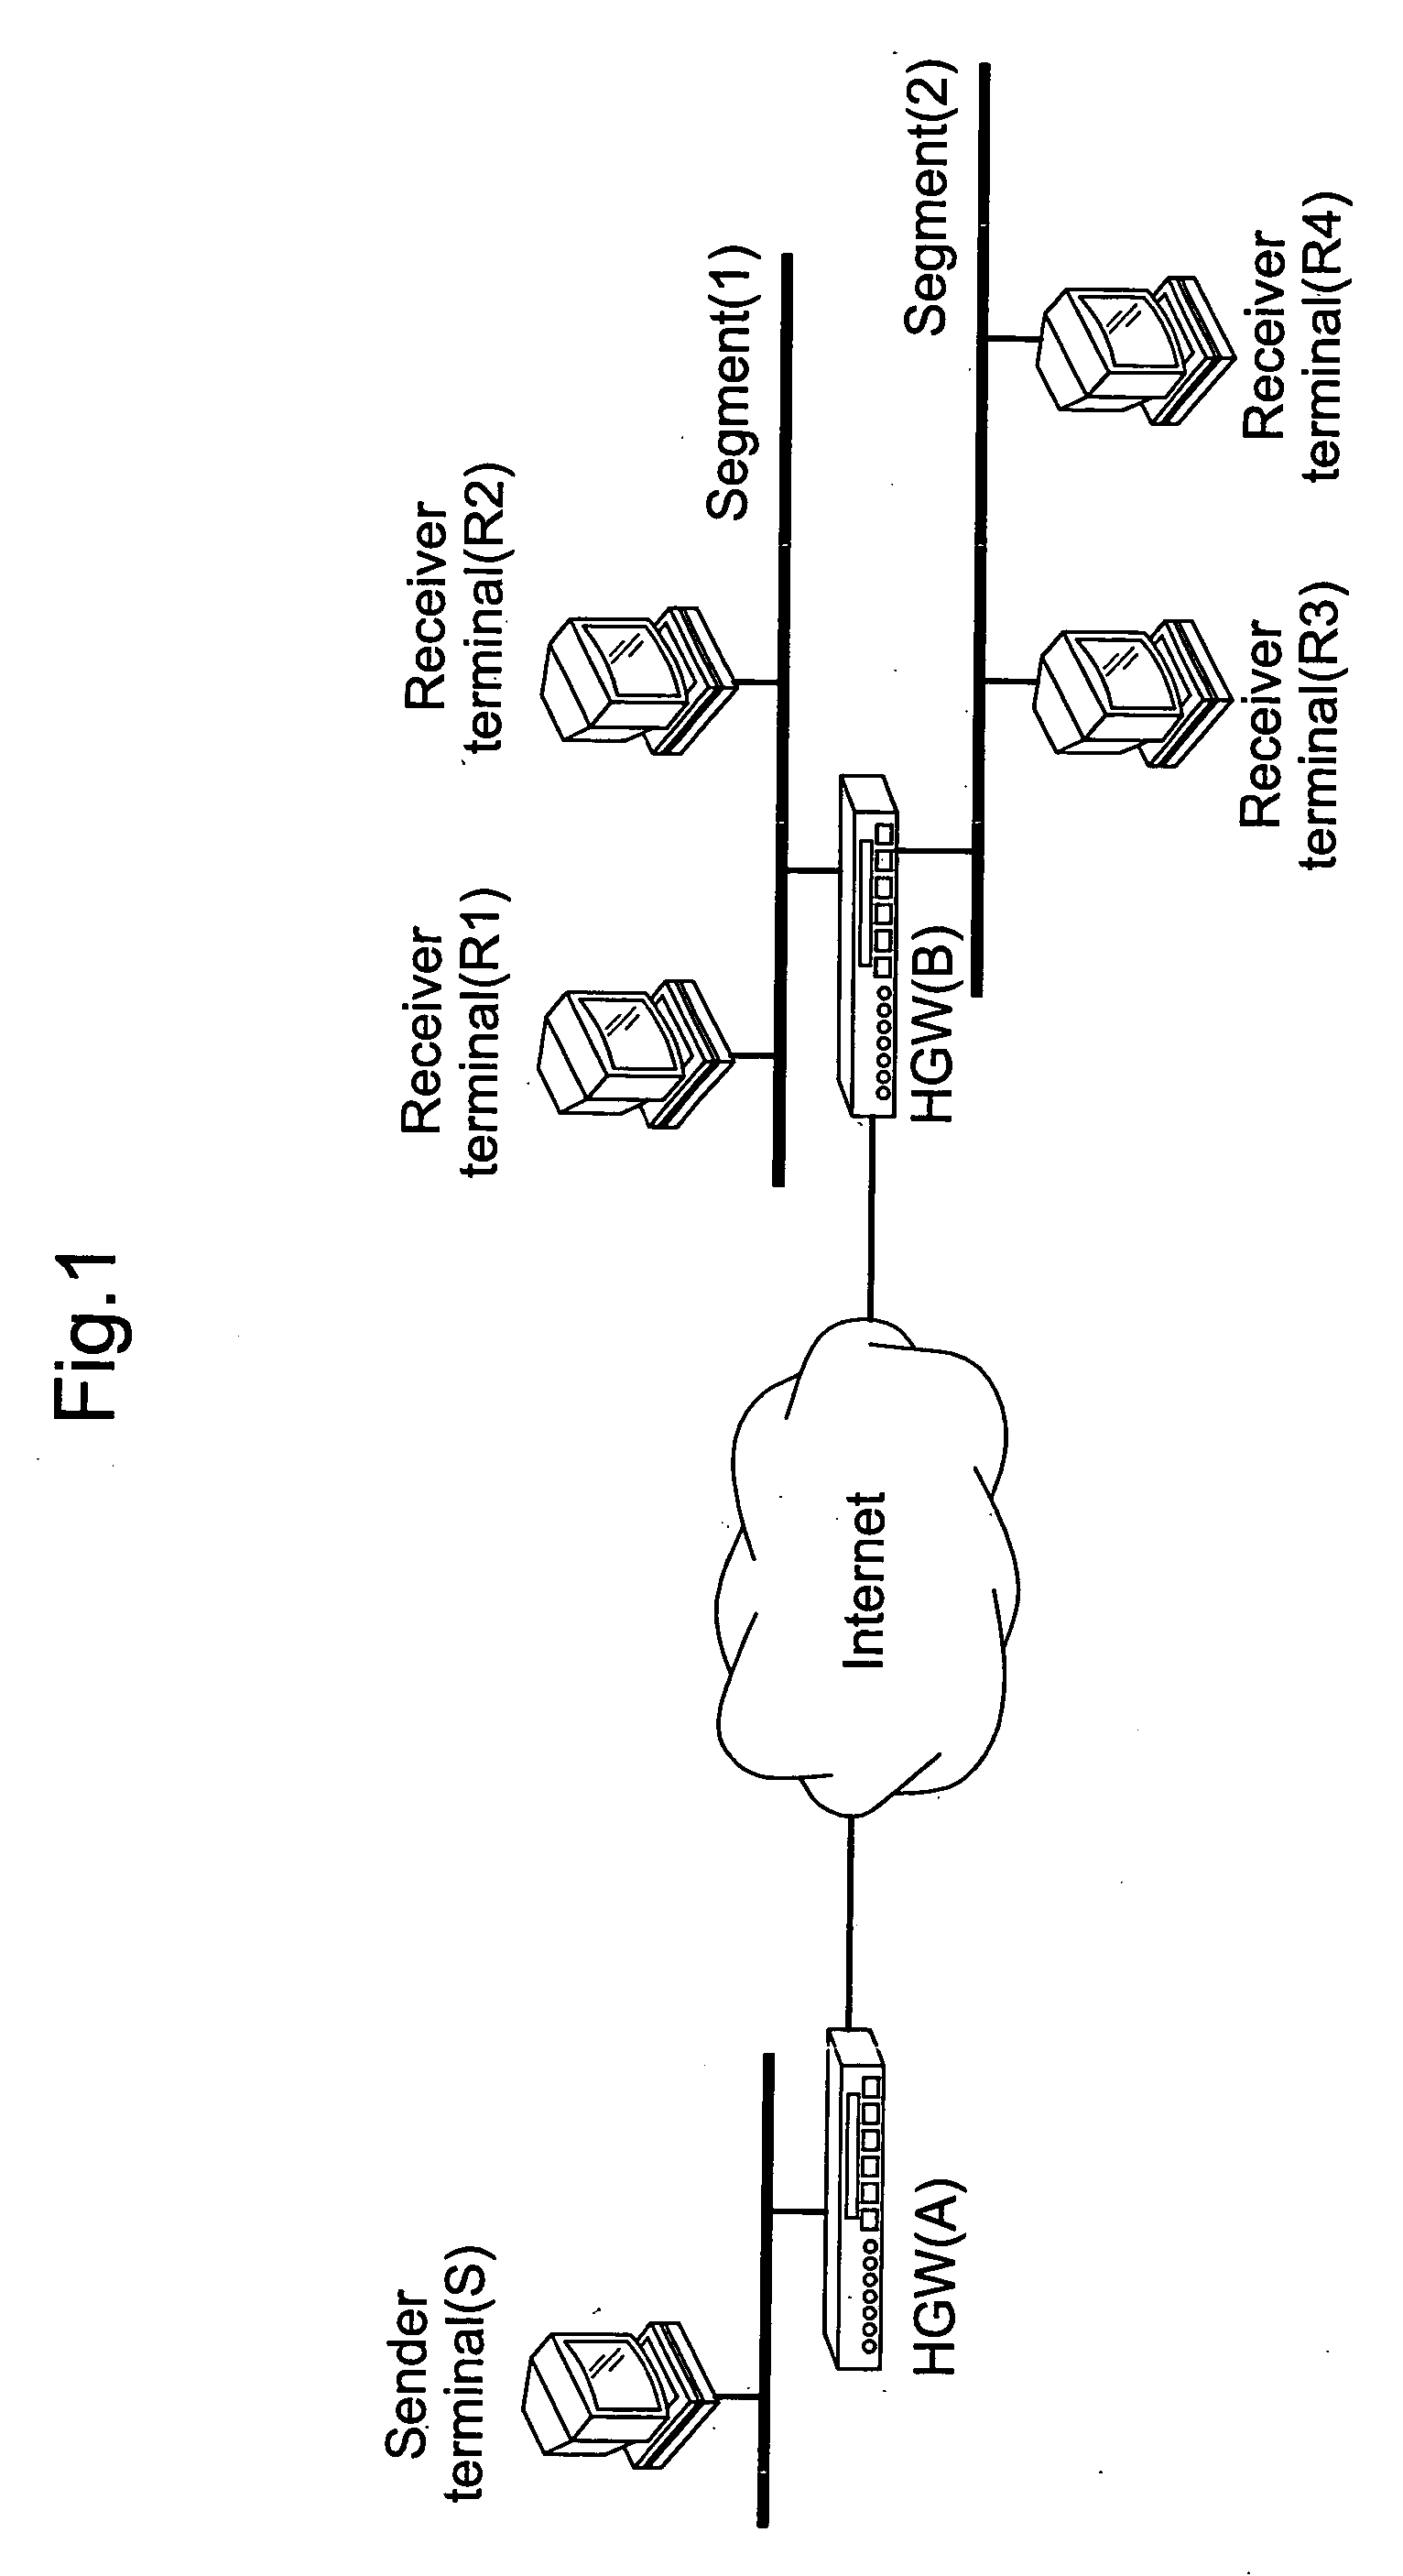 Multicast communication method and gateway apparatus